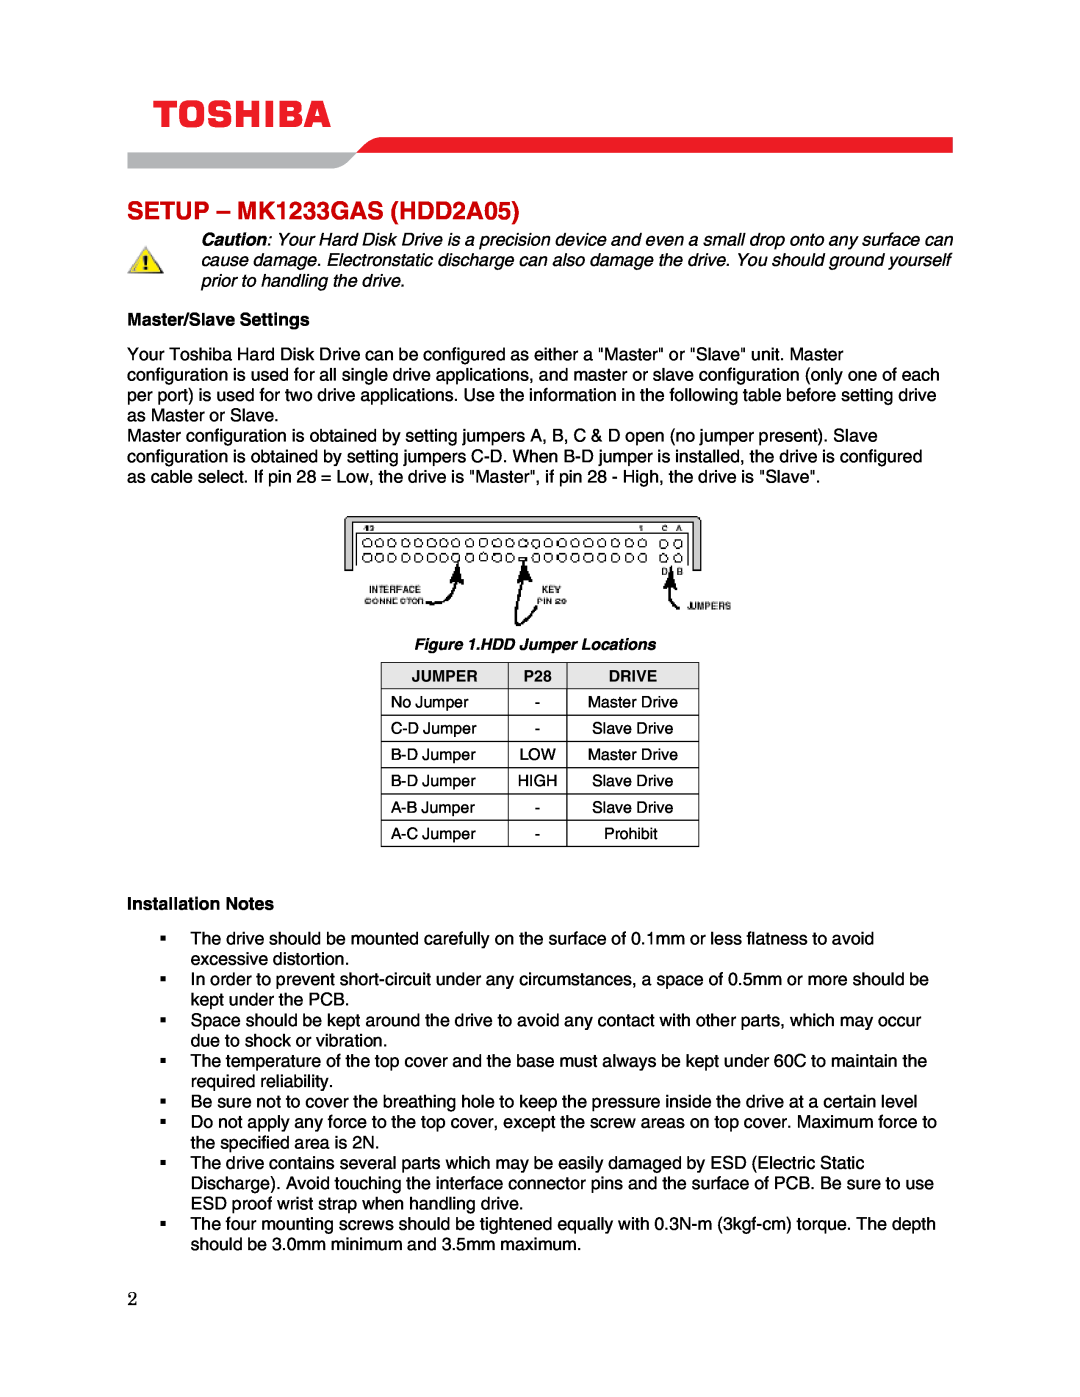 Toshiba user manual SETUP - MK1233GAS HDD2A05, Master/Slave Settings, Installation Notes 